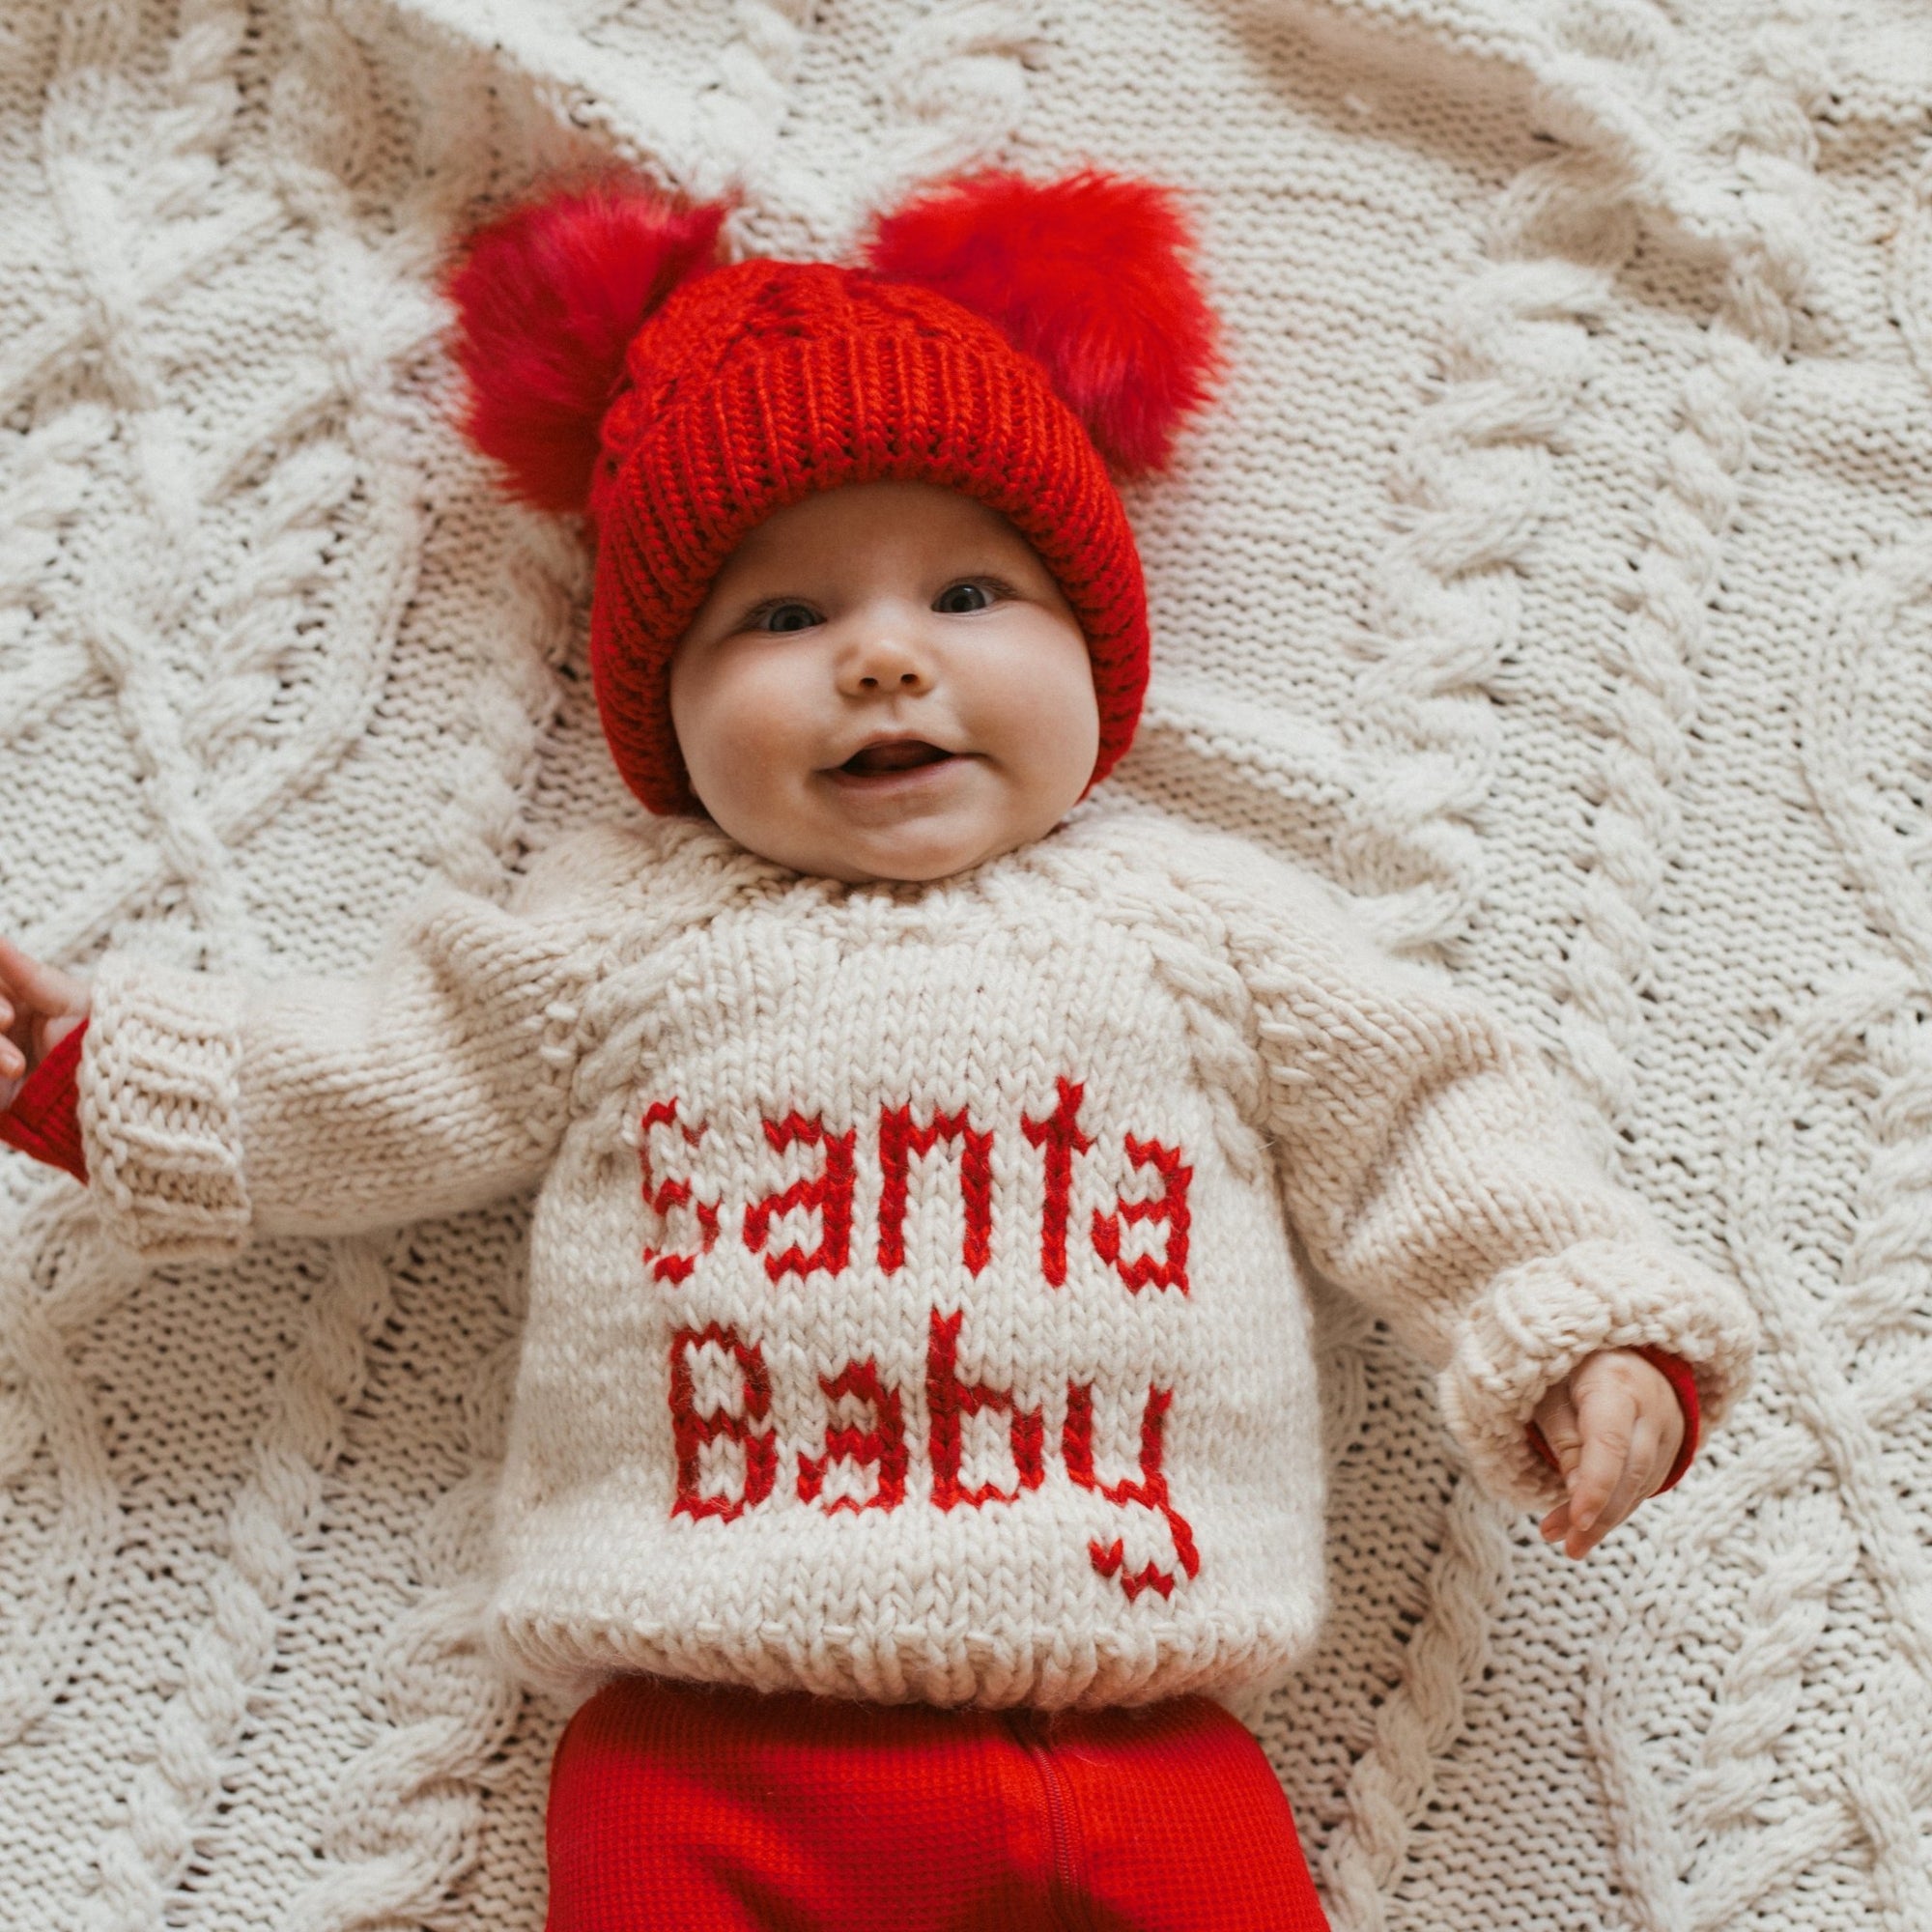 Santa Baby Crew Neck Sweater due Jul/Aug - Sweaters